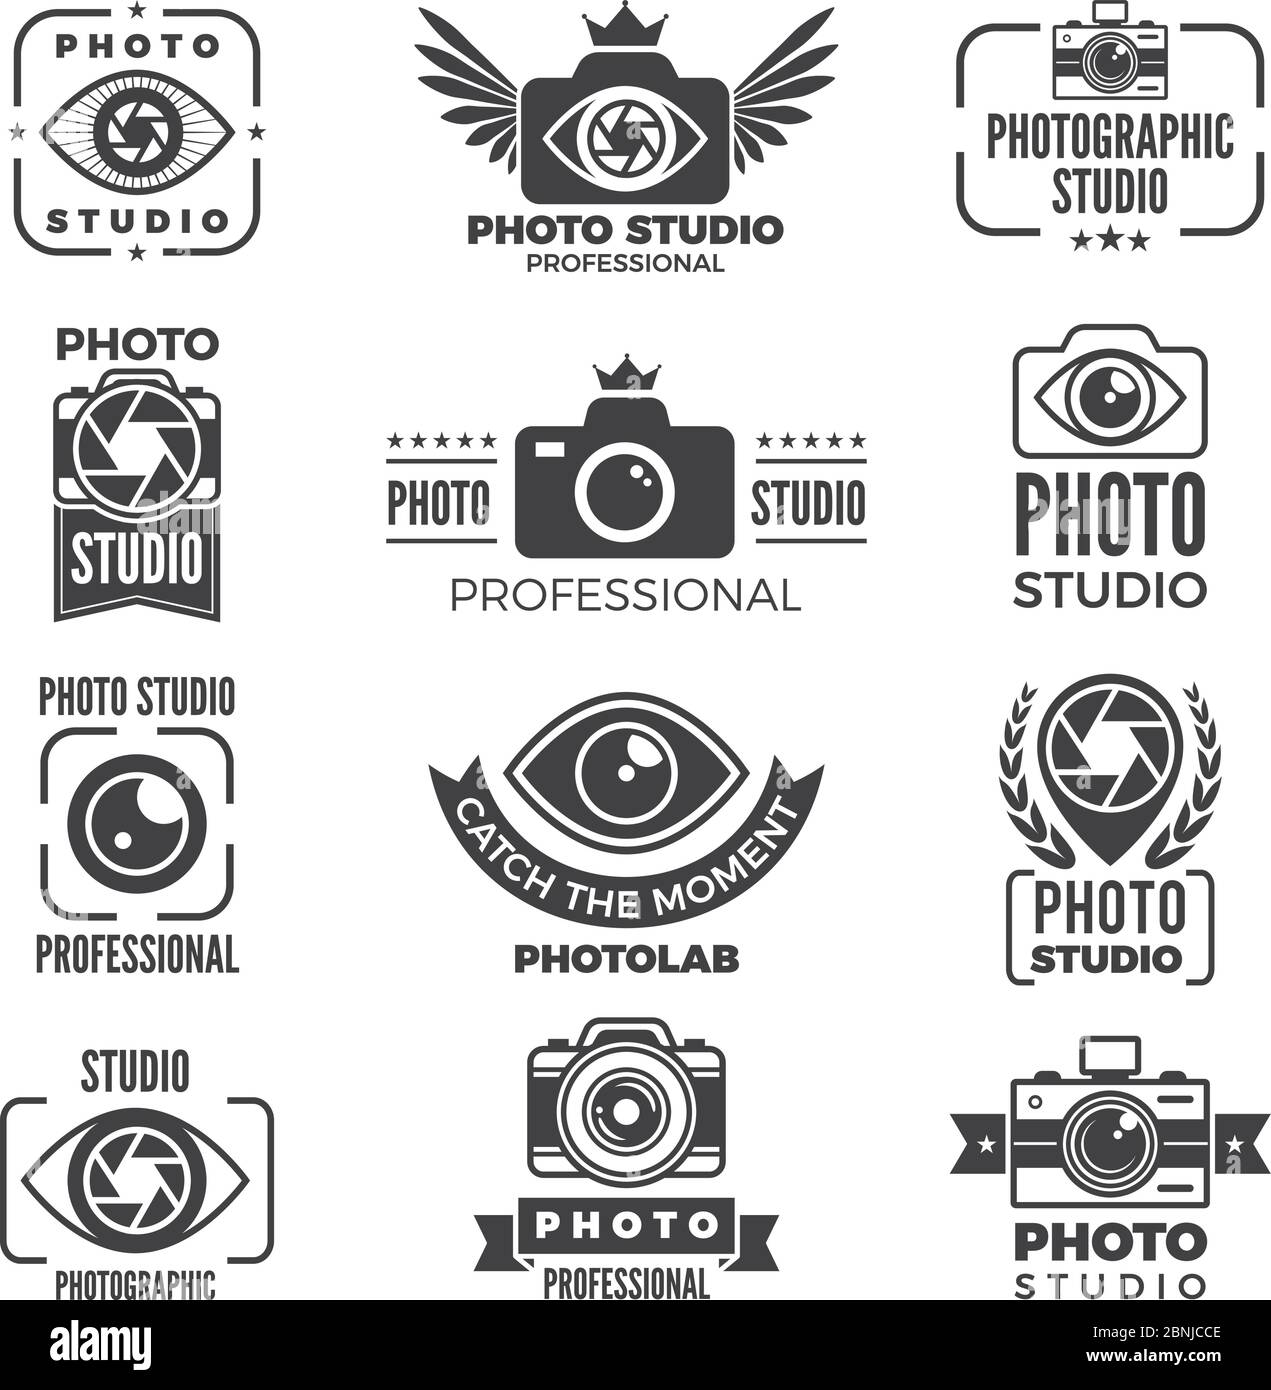 Retro pictures and logos for photo studios. Monochrome vector logotypes Stock Vector